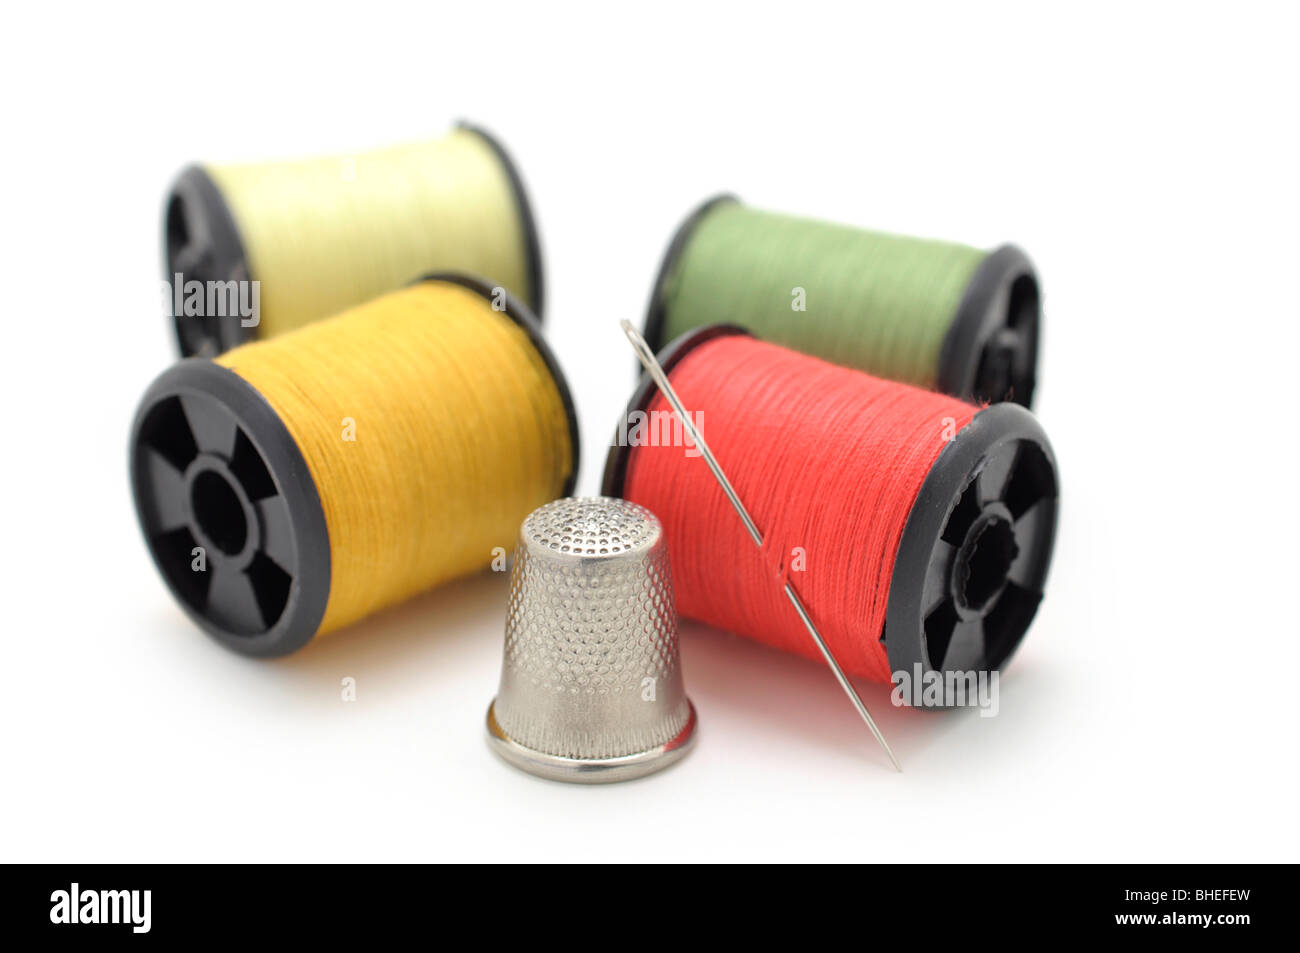 Spools of Thread and Needle, Thimble Stock Photo